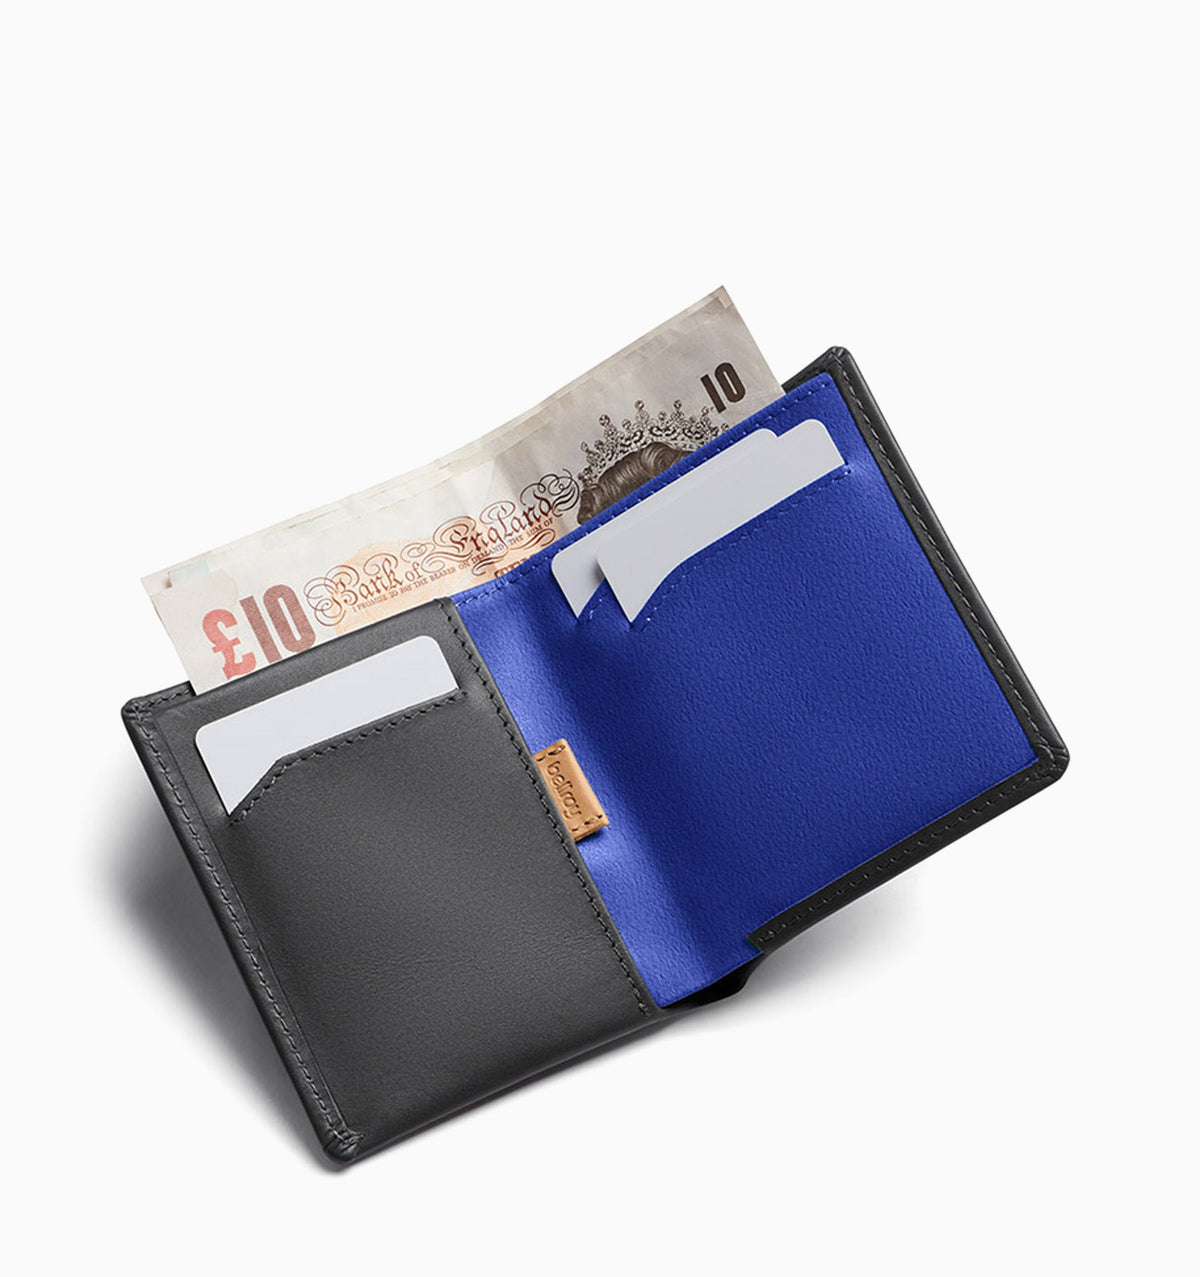 Bellroy Note Sleeve Wallet - Charcoal Cobalt